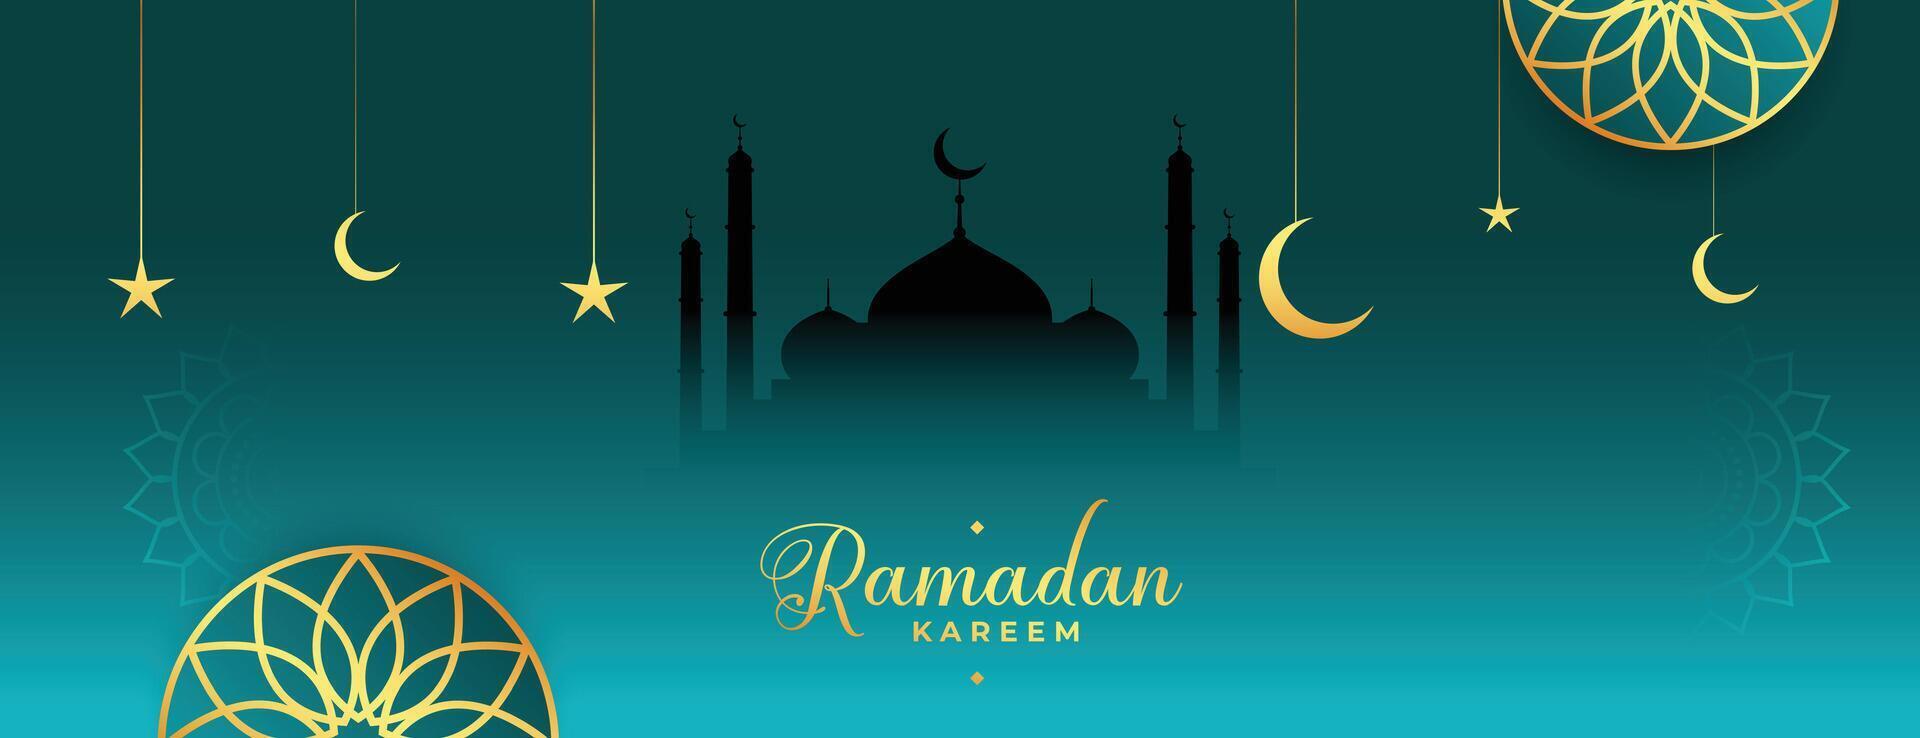 ramadan kareem muslim festival wishes banner design vector